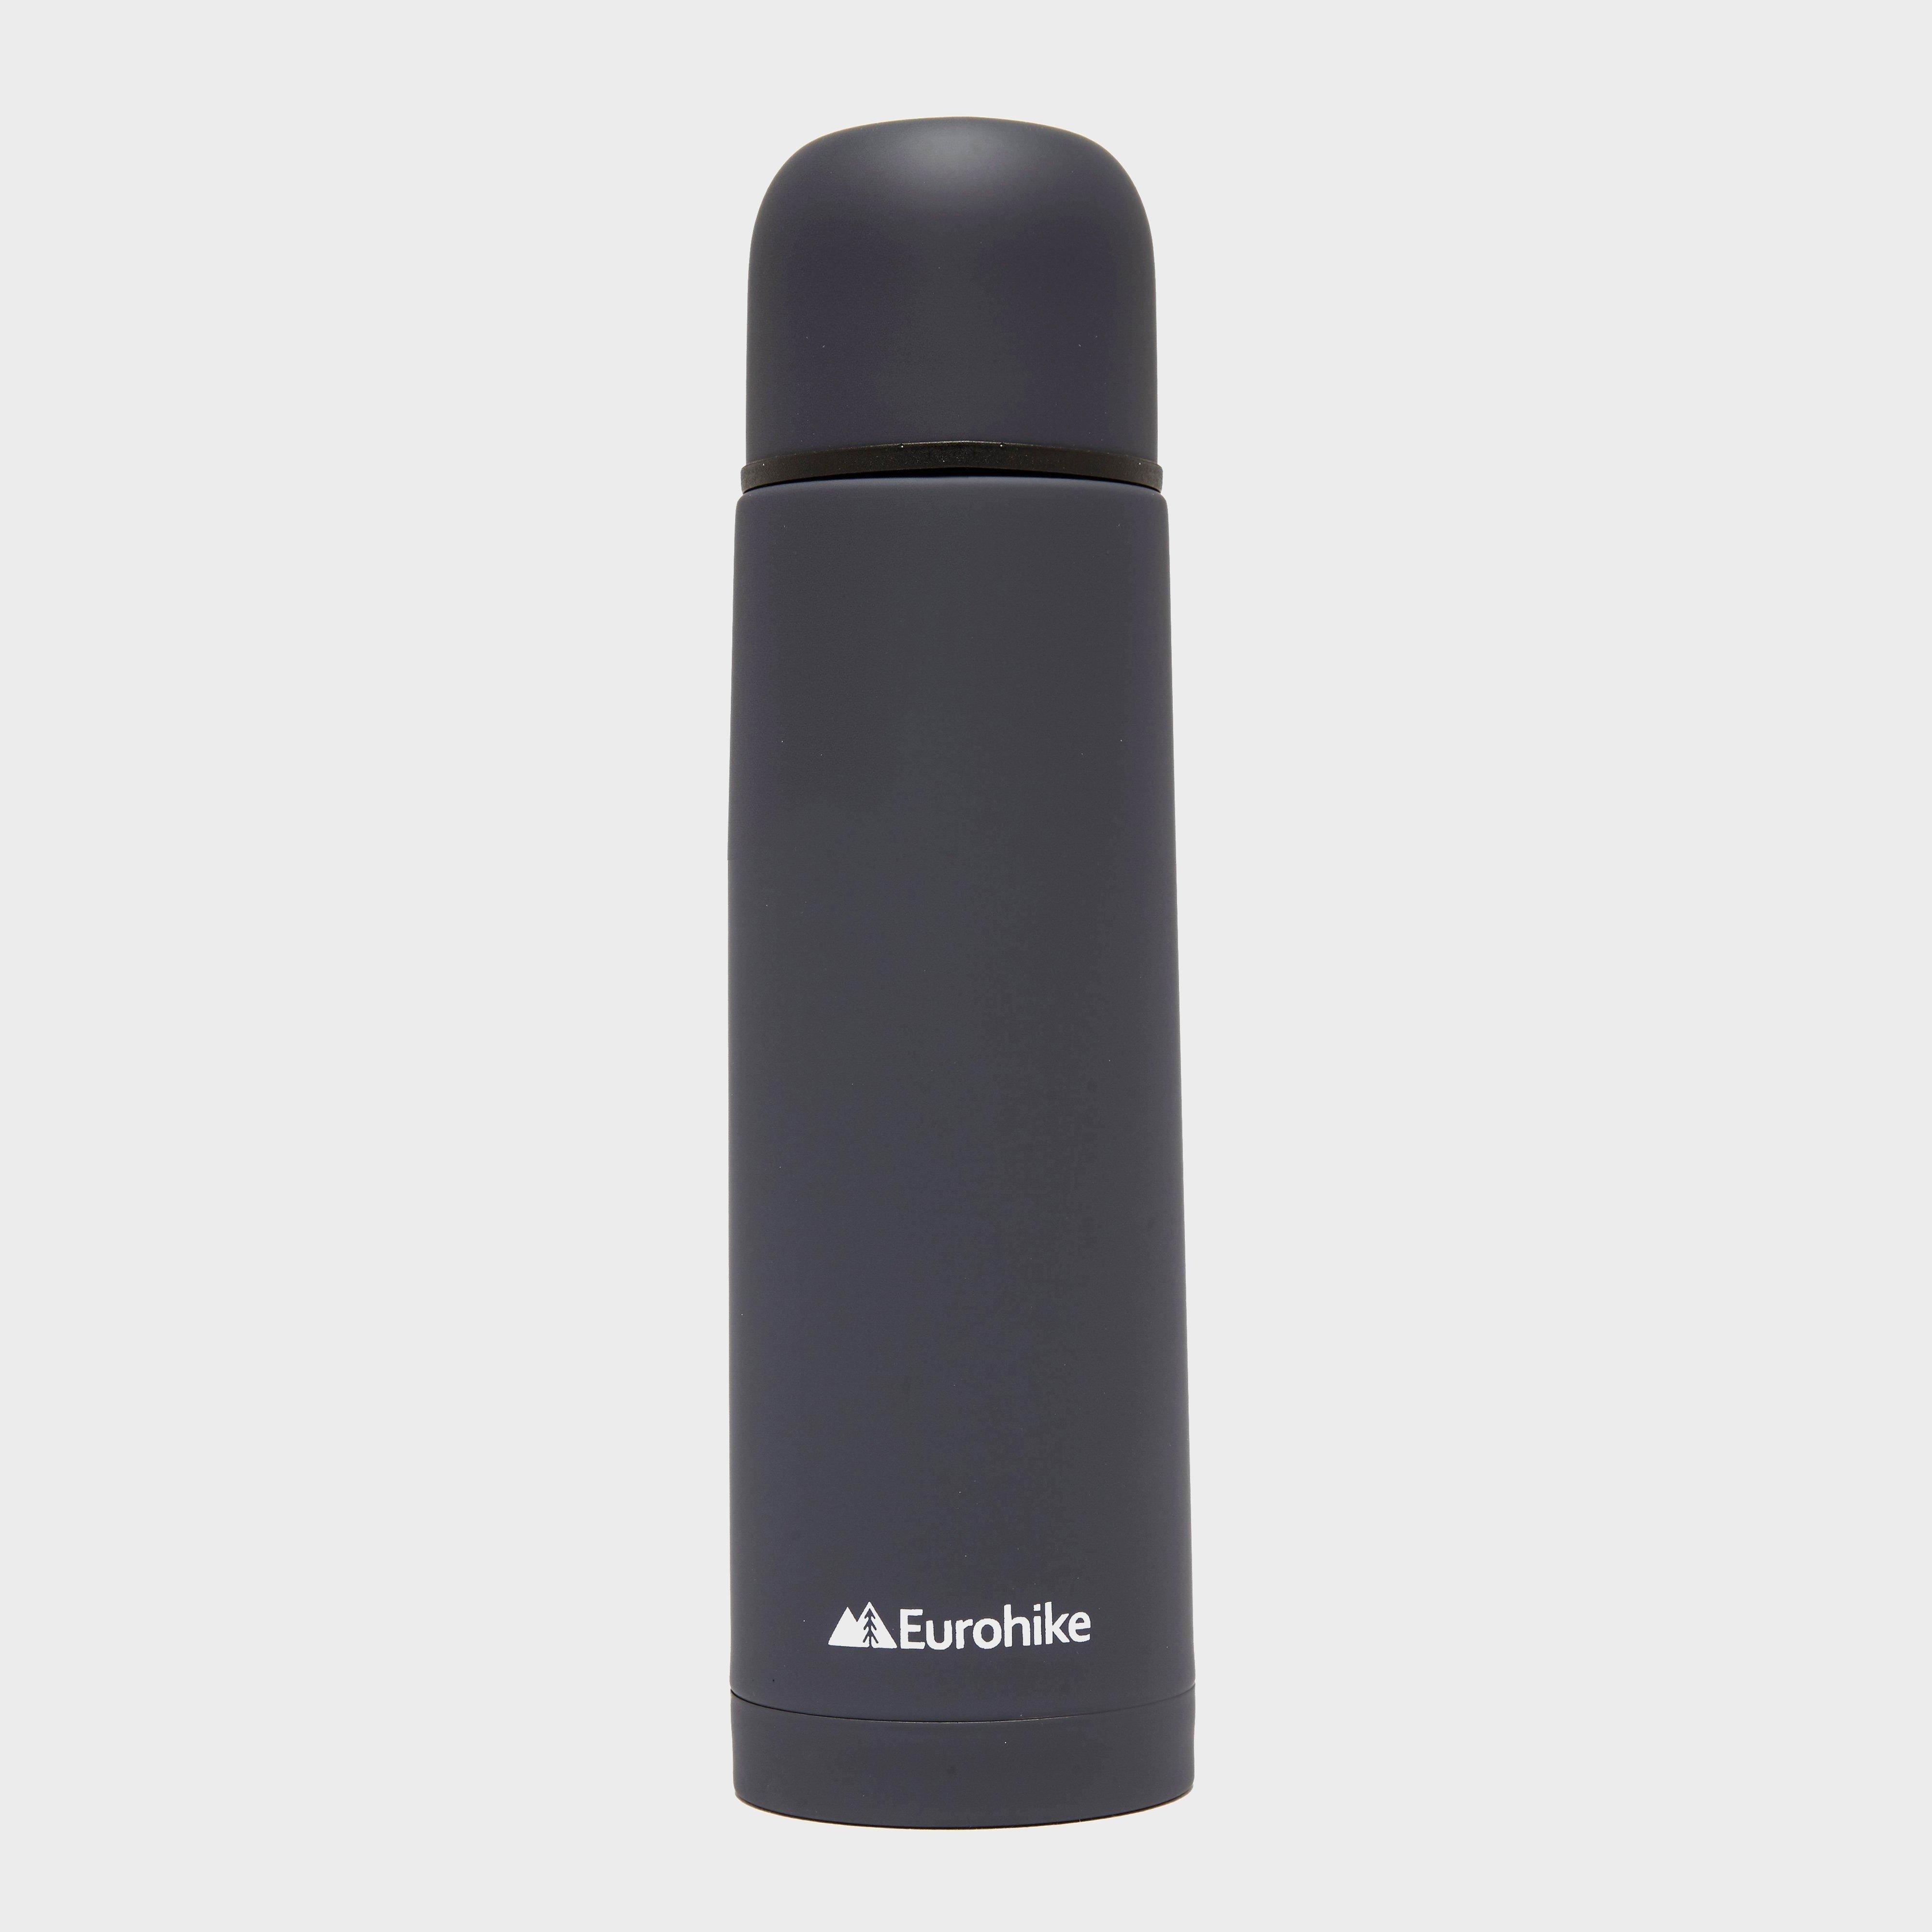 Eurohike 0.5L Flask, Black